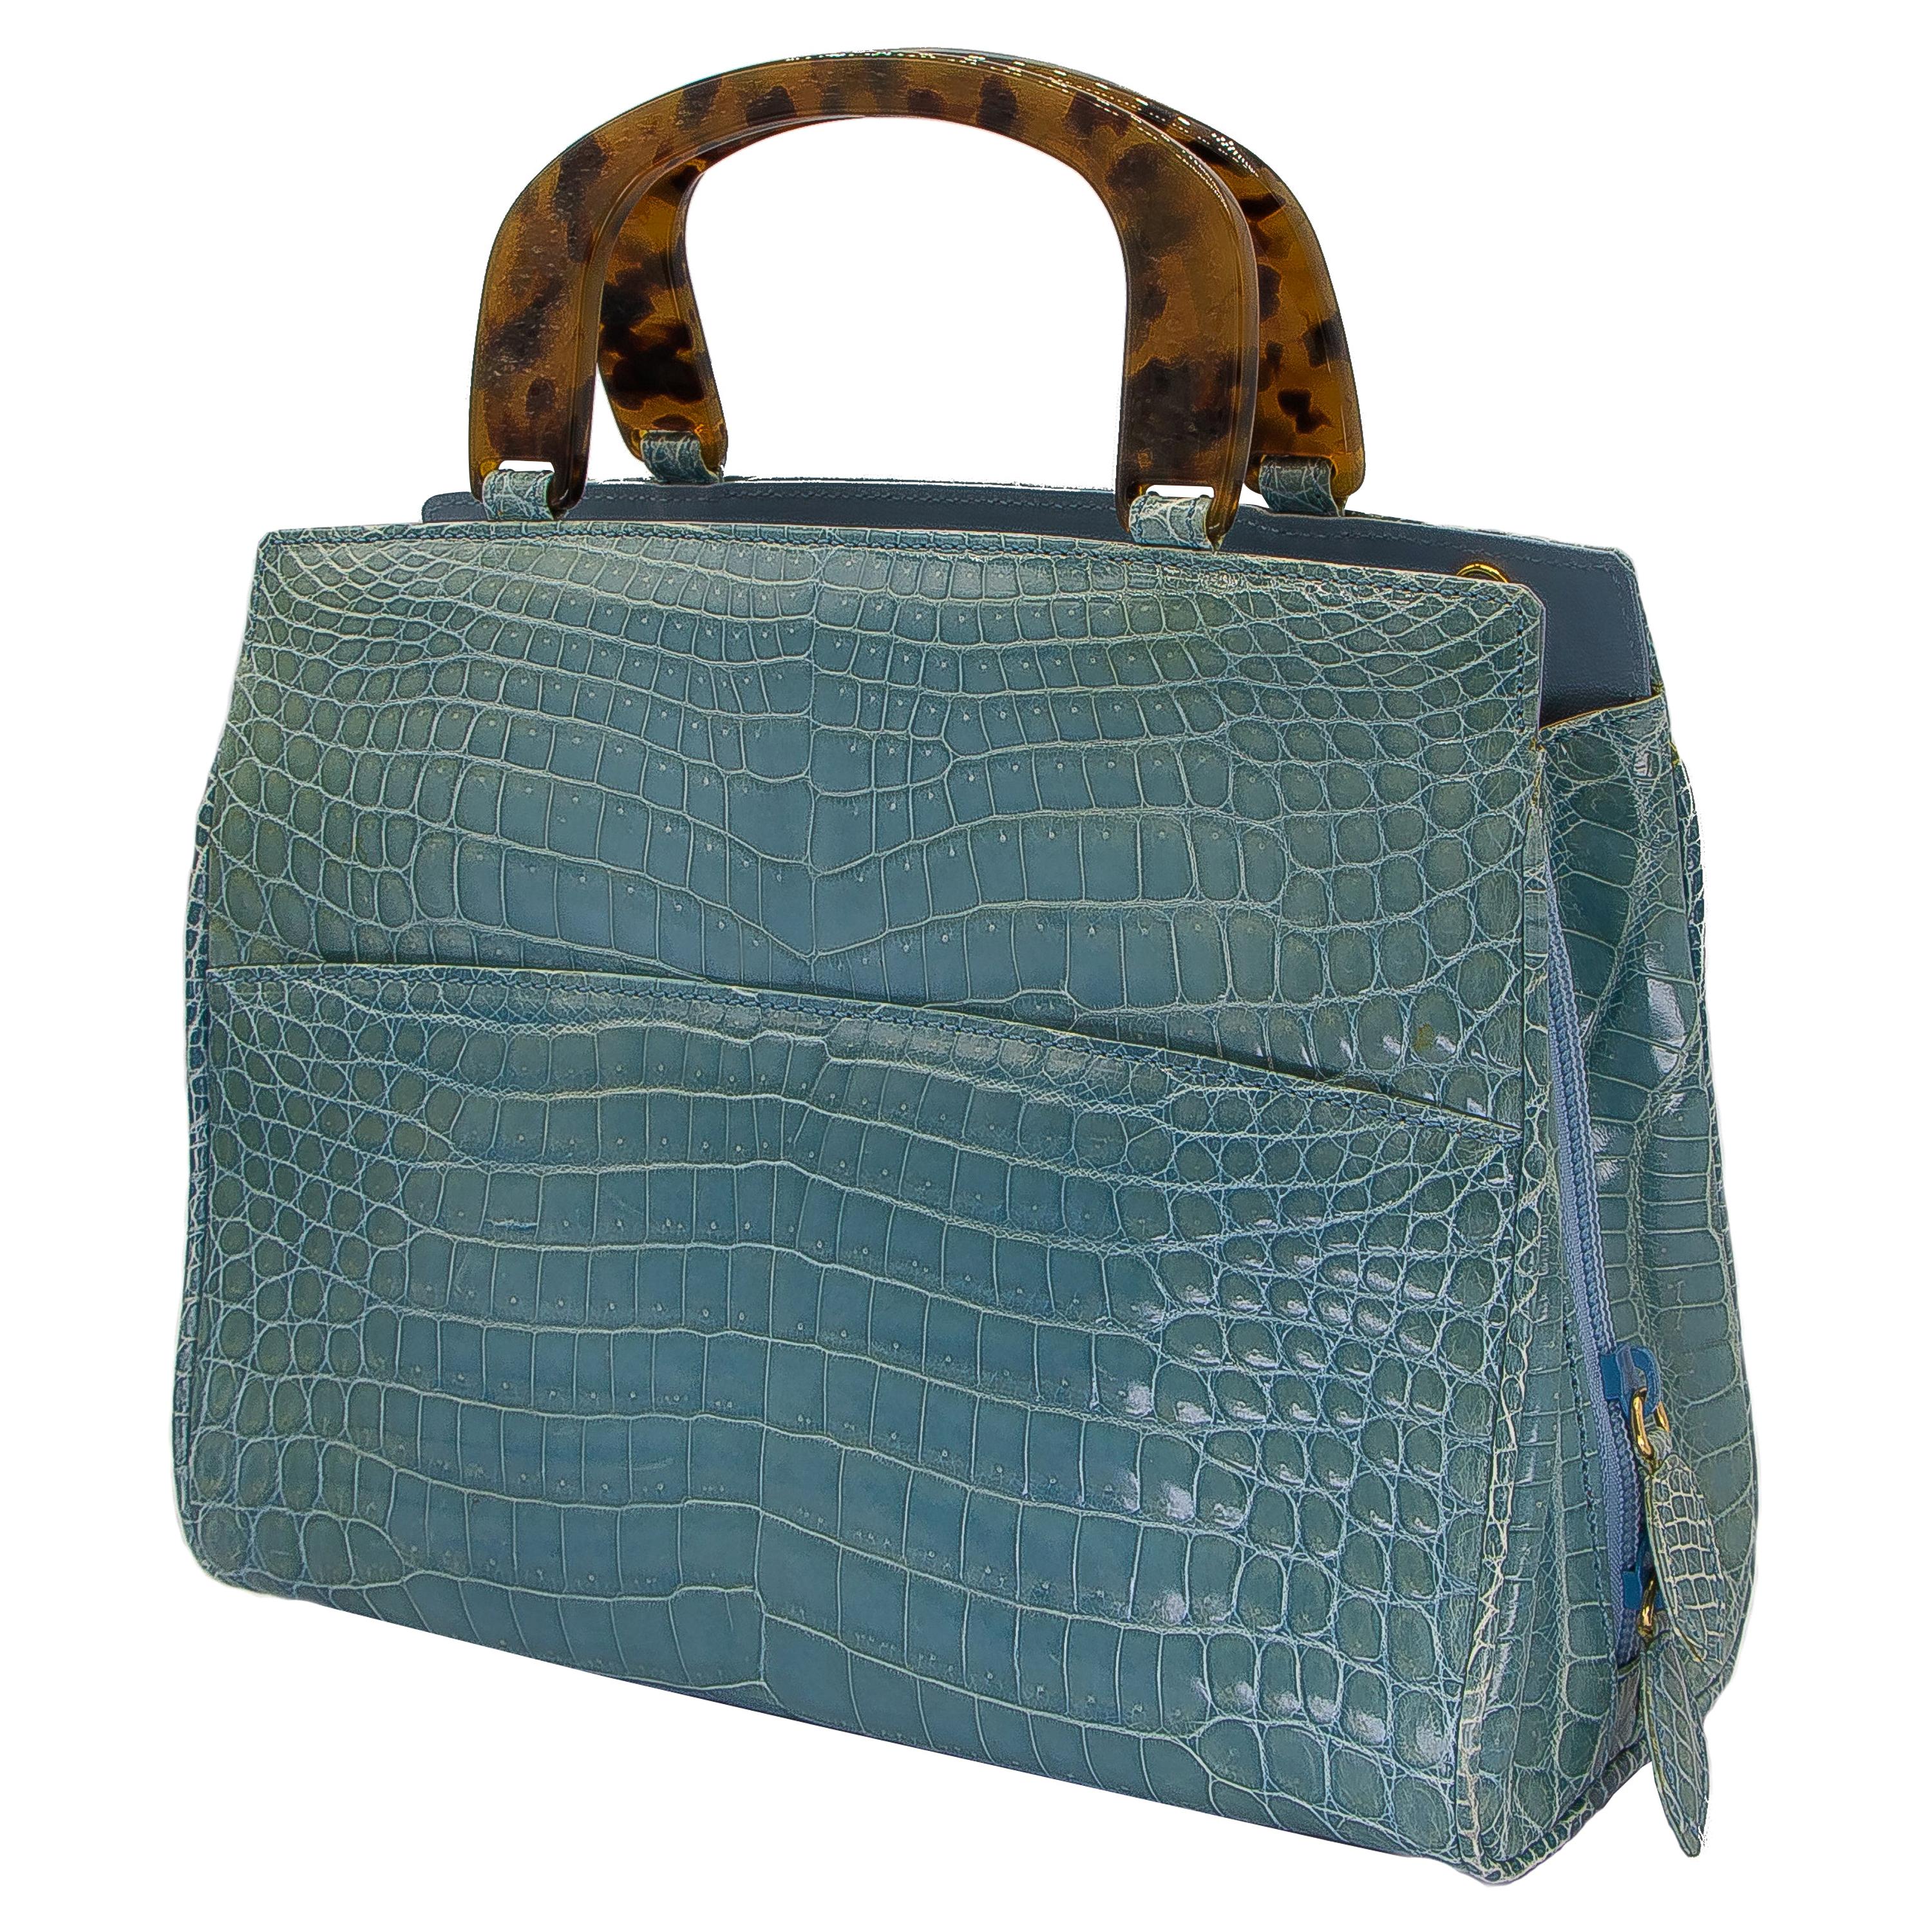 Rare Lana Marks Celadon blue Crocodile handbag with matching strap